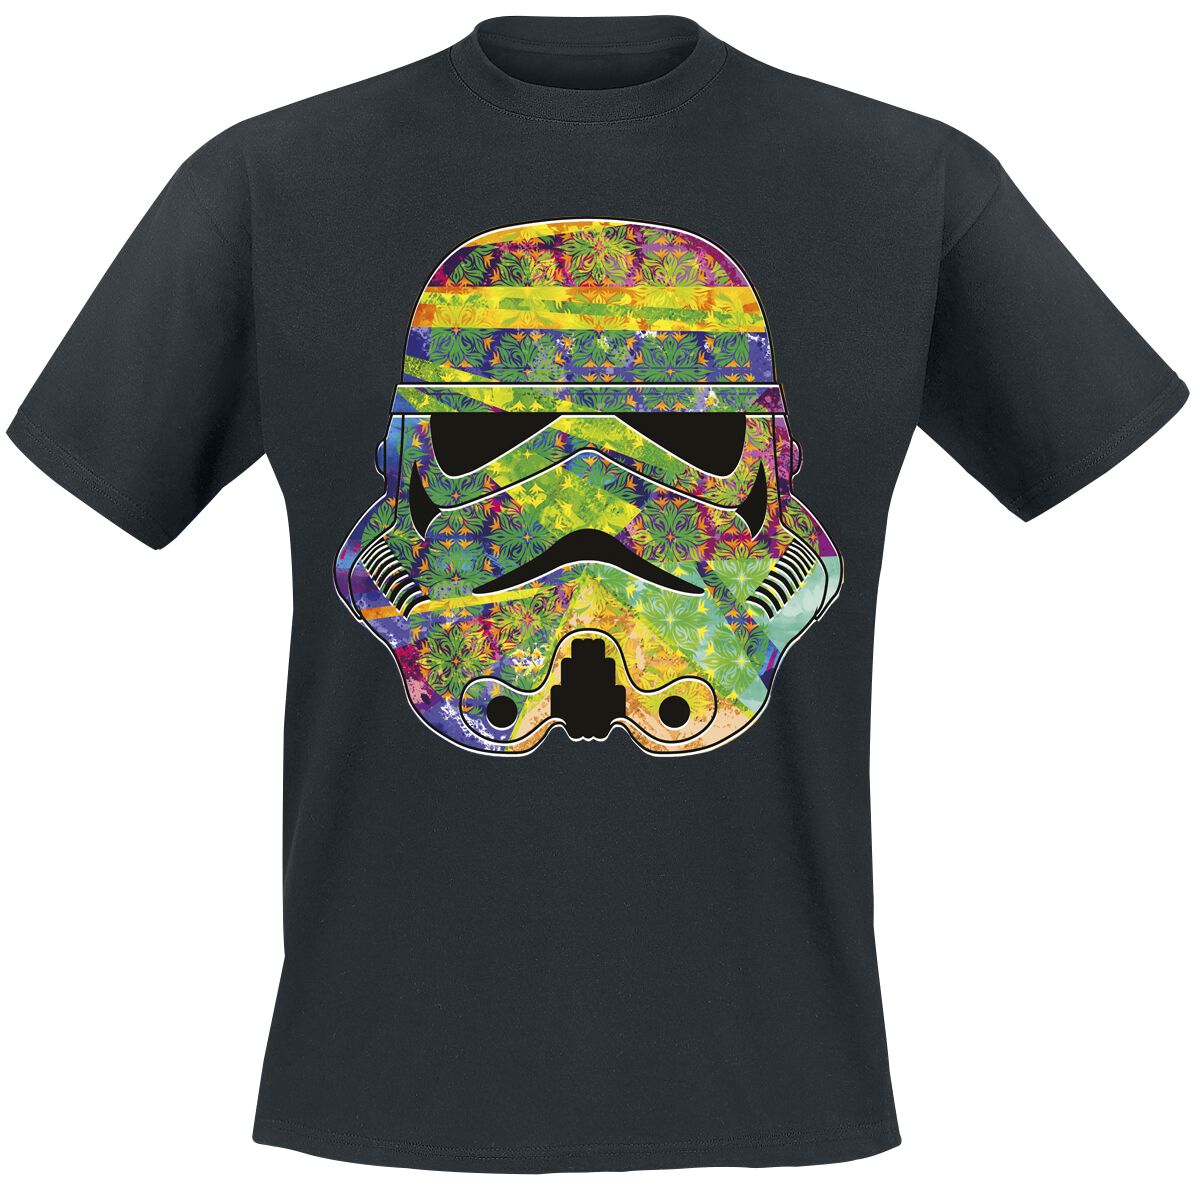 Star Wars Stormtrooper - Tropic T-Shirt black